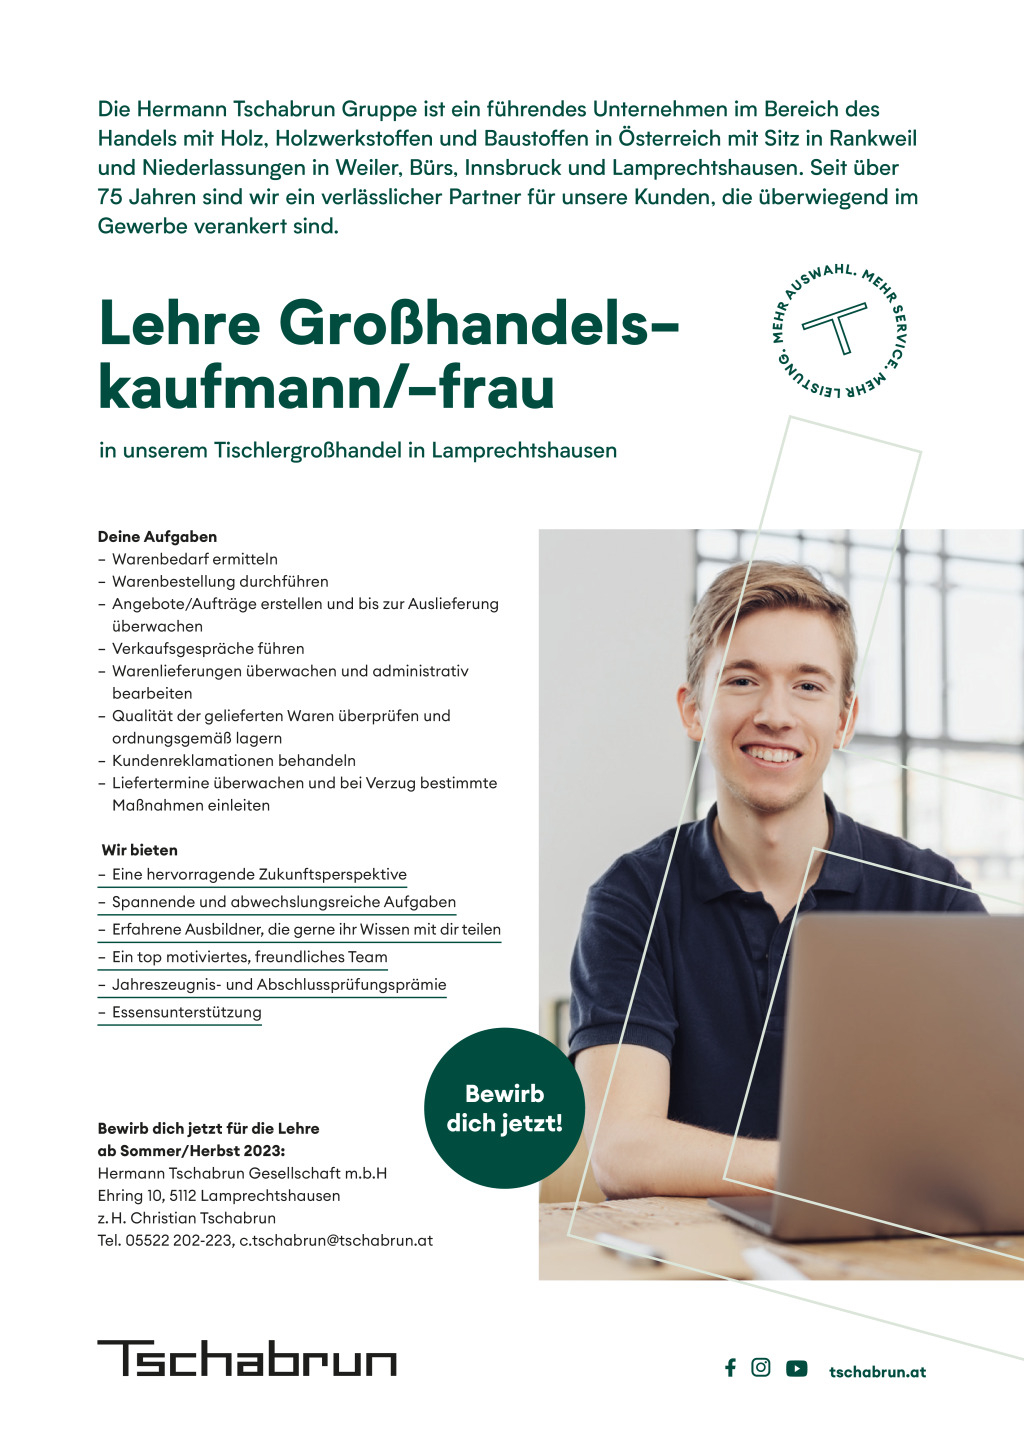 Lehre Großhandelskaufmann/frau - Schnittholz/Furnier